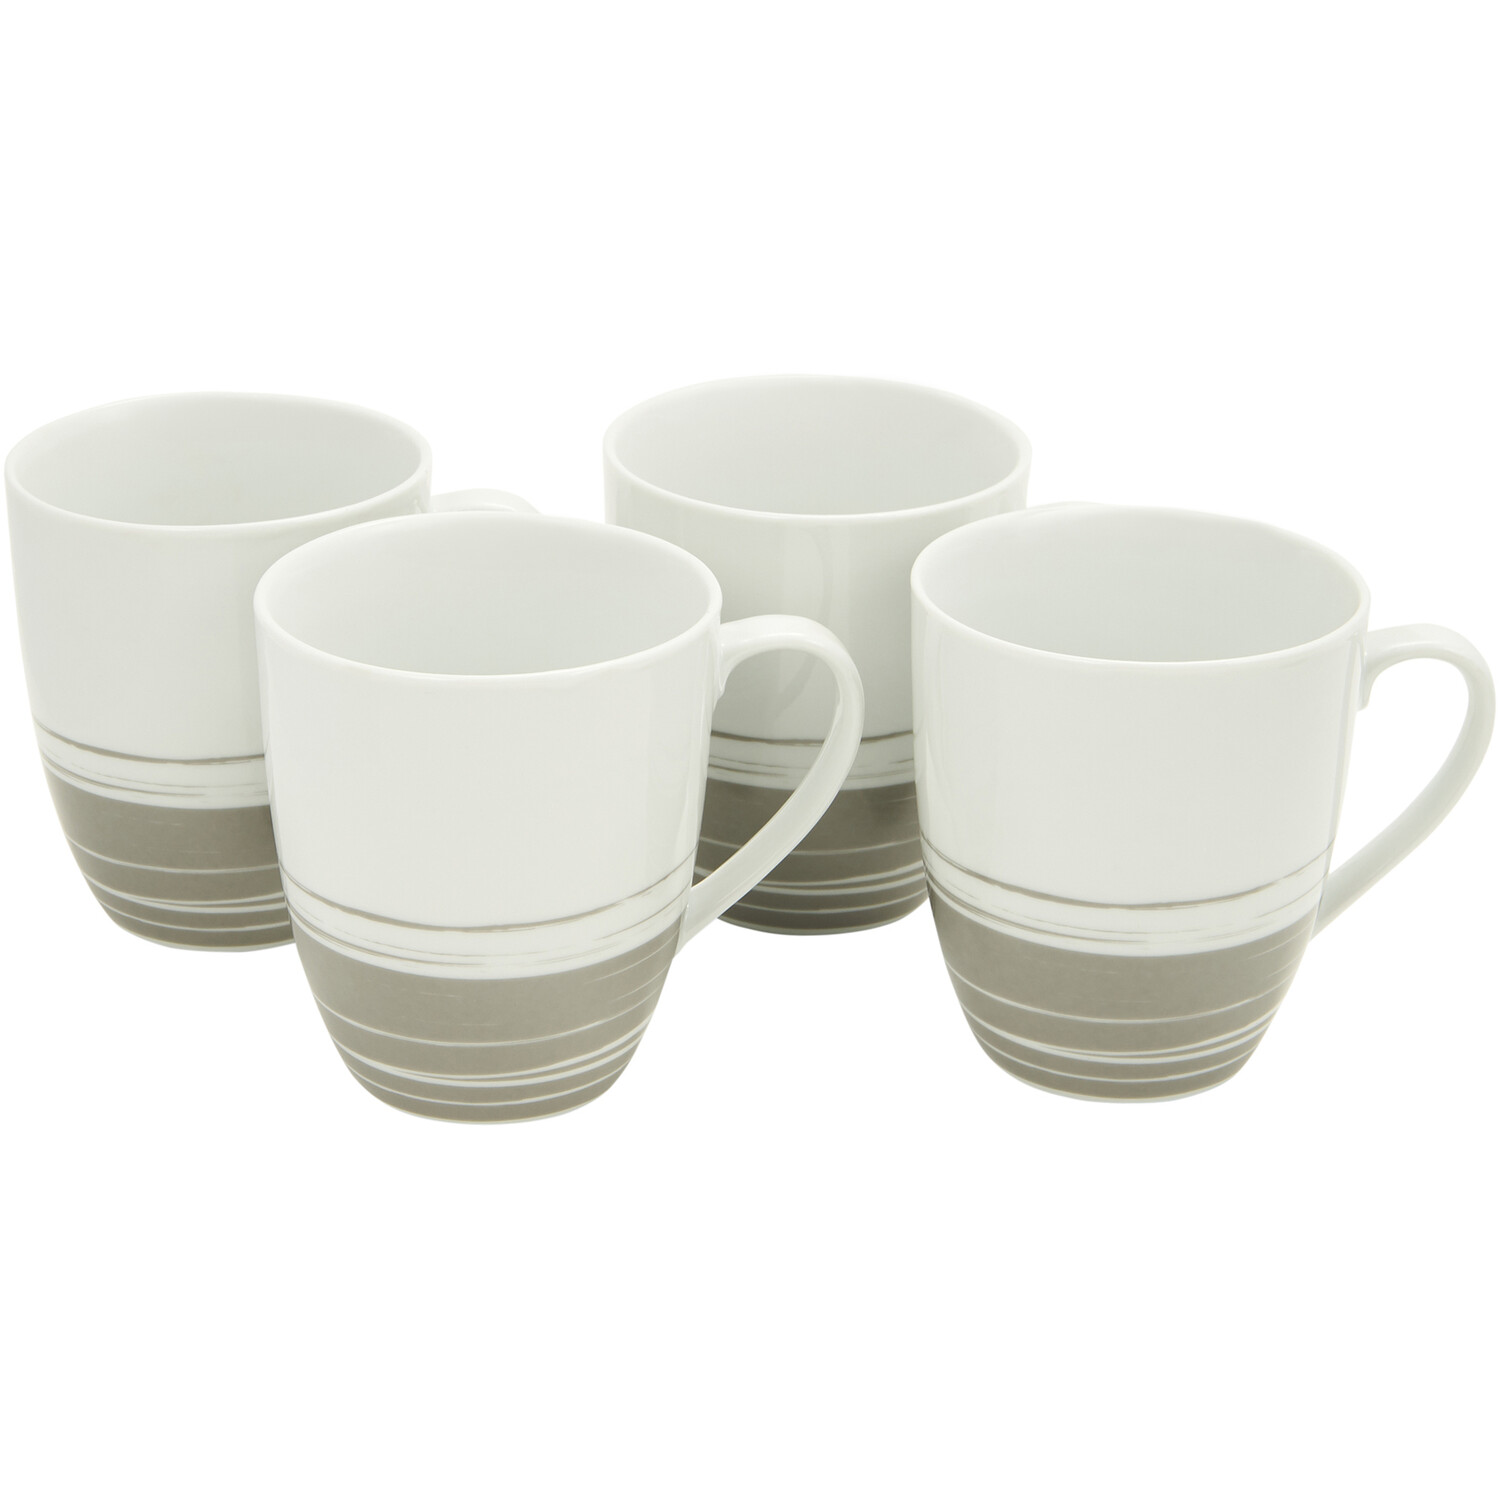 Pack of 4 Porto Mugs - White Image 1